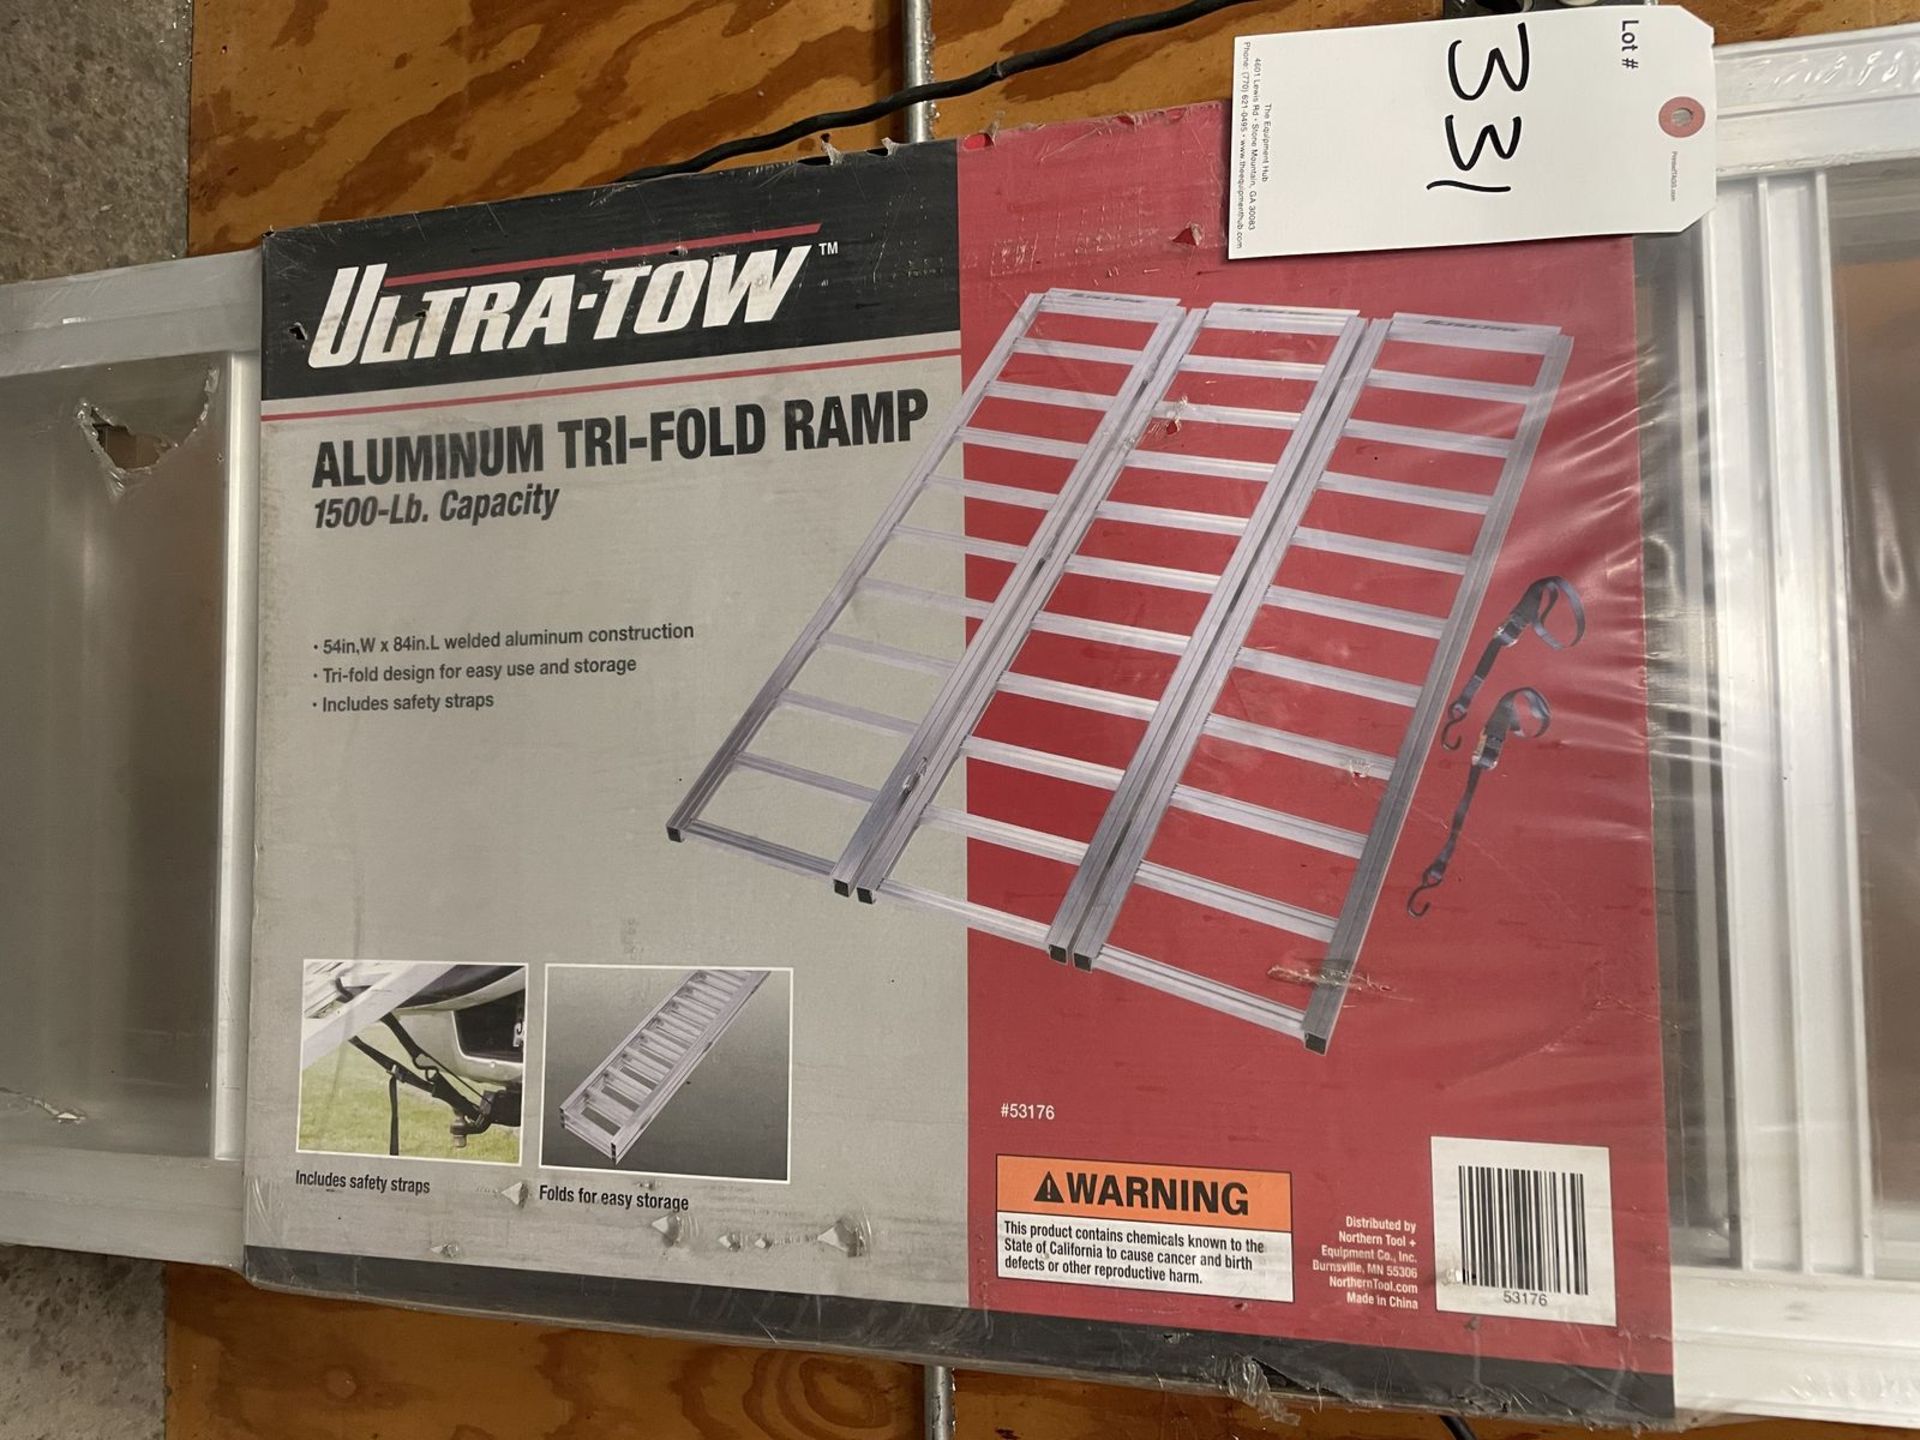 New Ultra Tow Aluminum Tri-Fold Ramp - Image 2 of 2